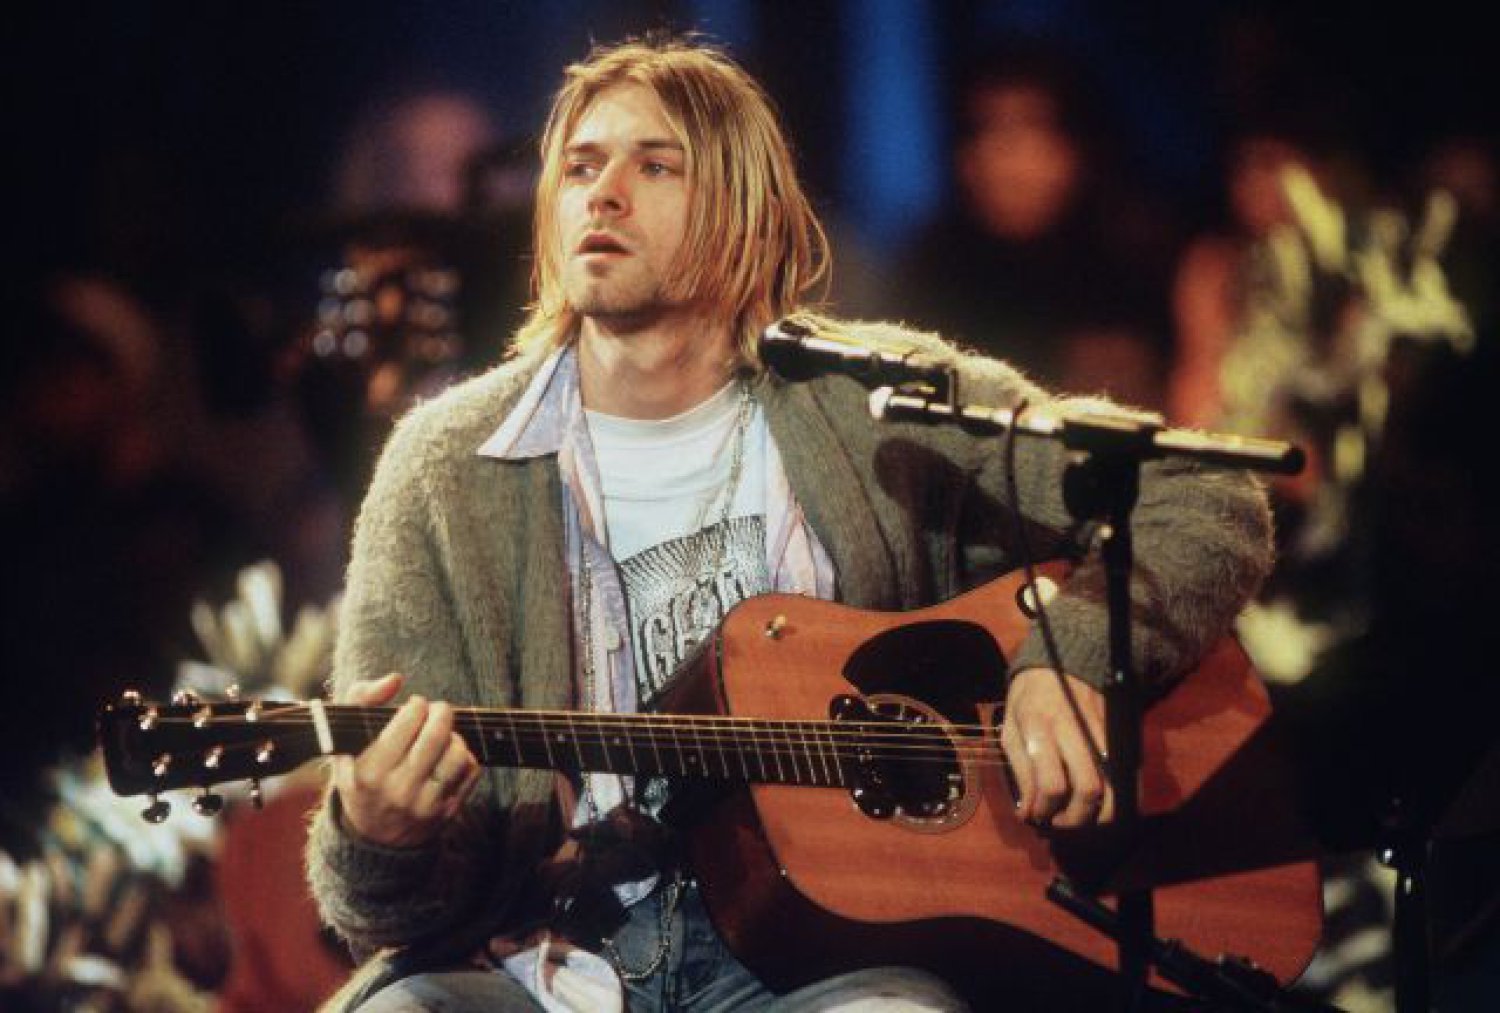 Los 8 mejores homenajes a la música de Kurt Cobain, el líder de Nirvana |  LOS40 Classic | LOS40